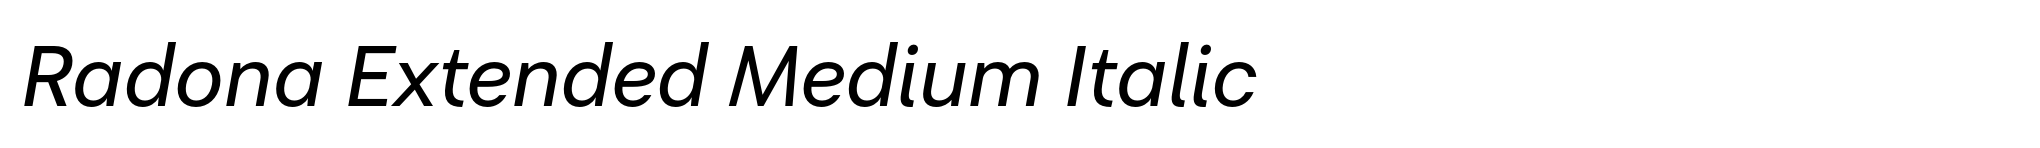 Radona Extended Medium Italic image